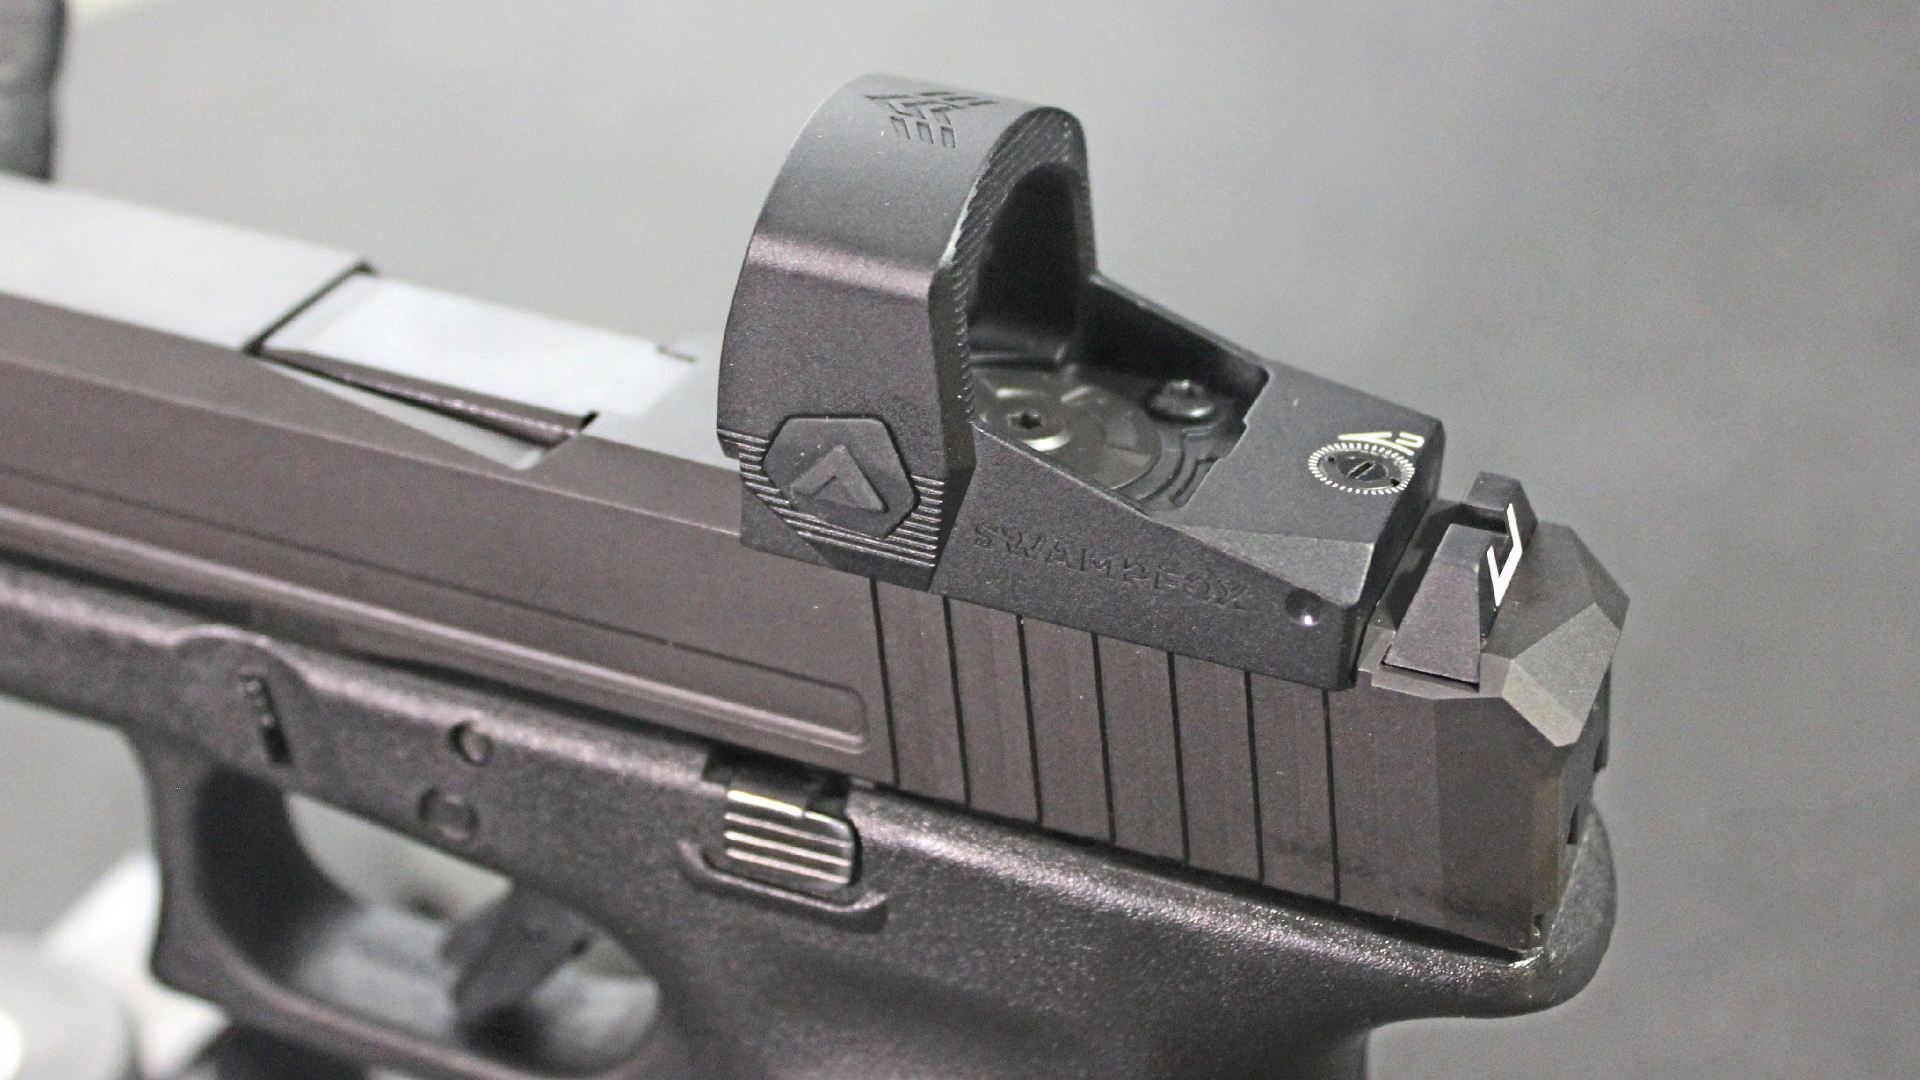 Swampfox red-dot optic on custom glock gun pistol